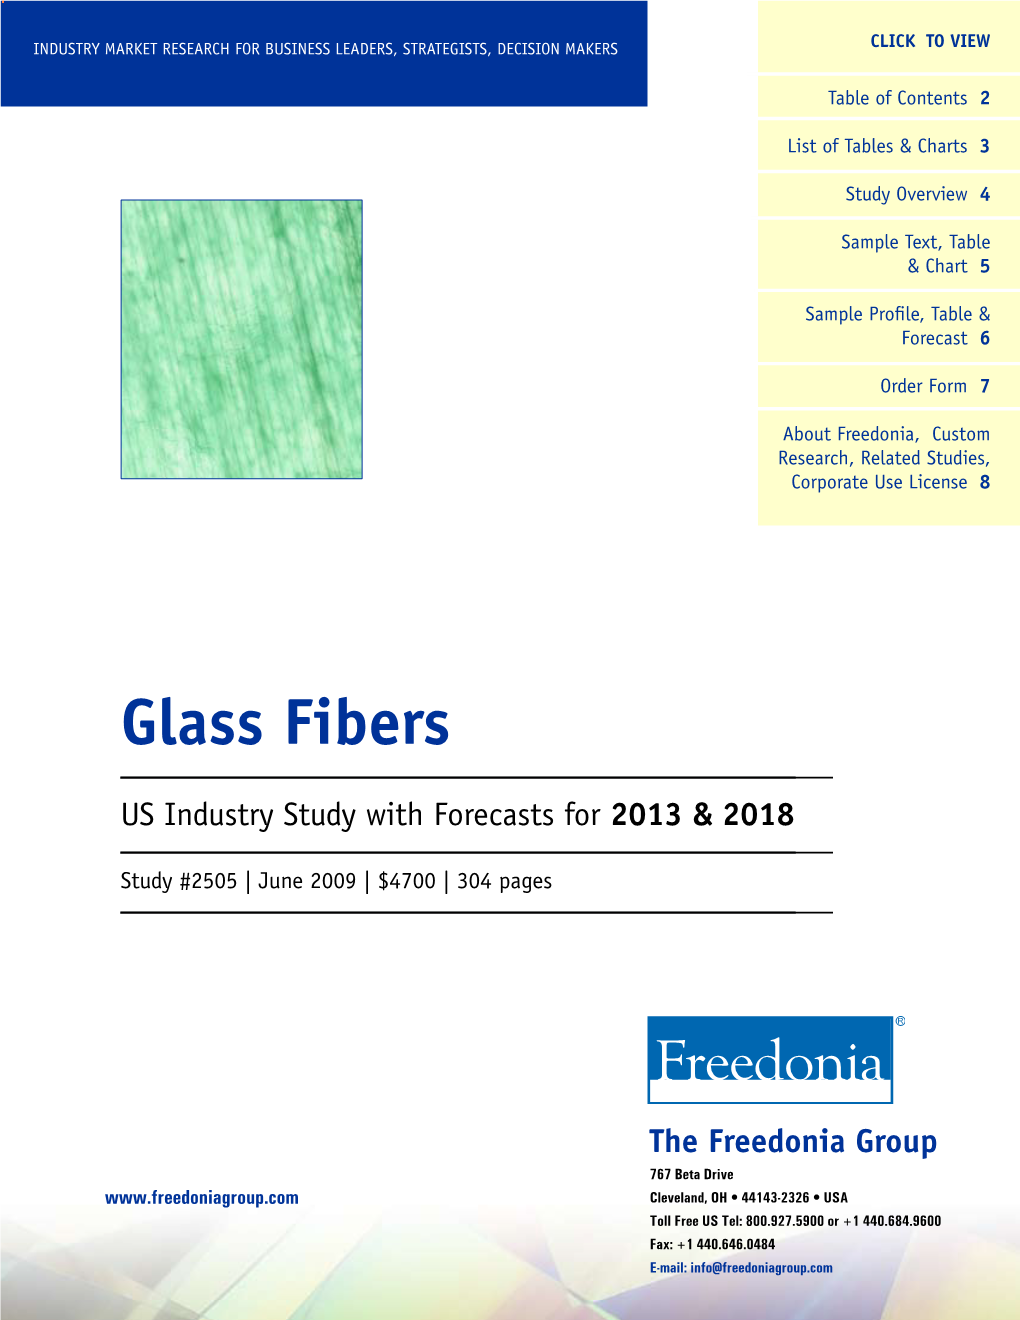 Glass Fibers